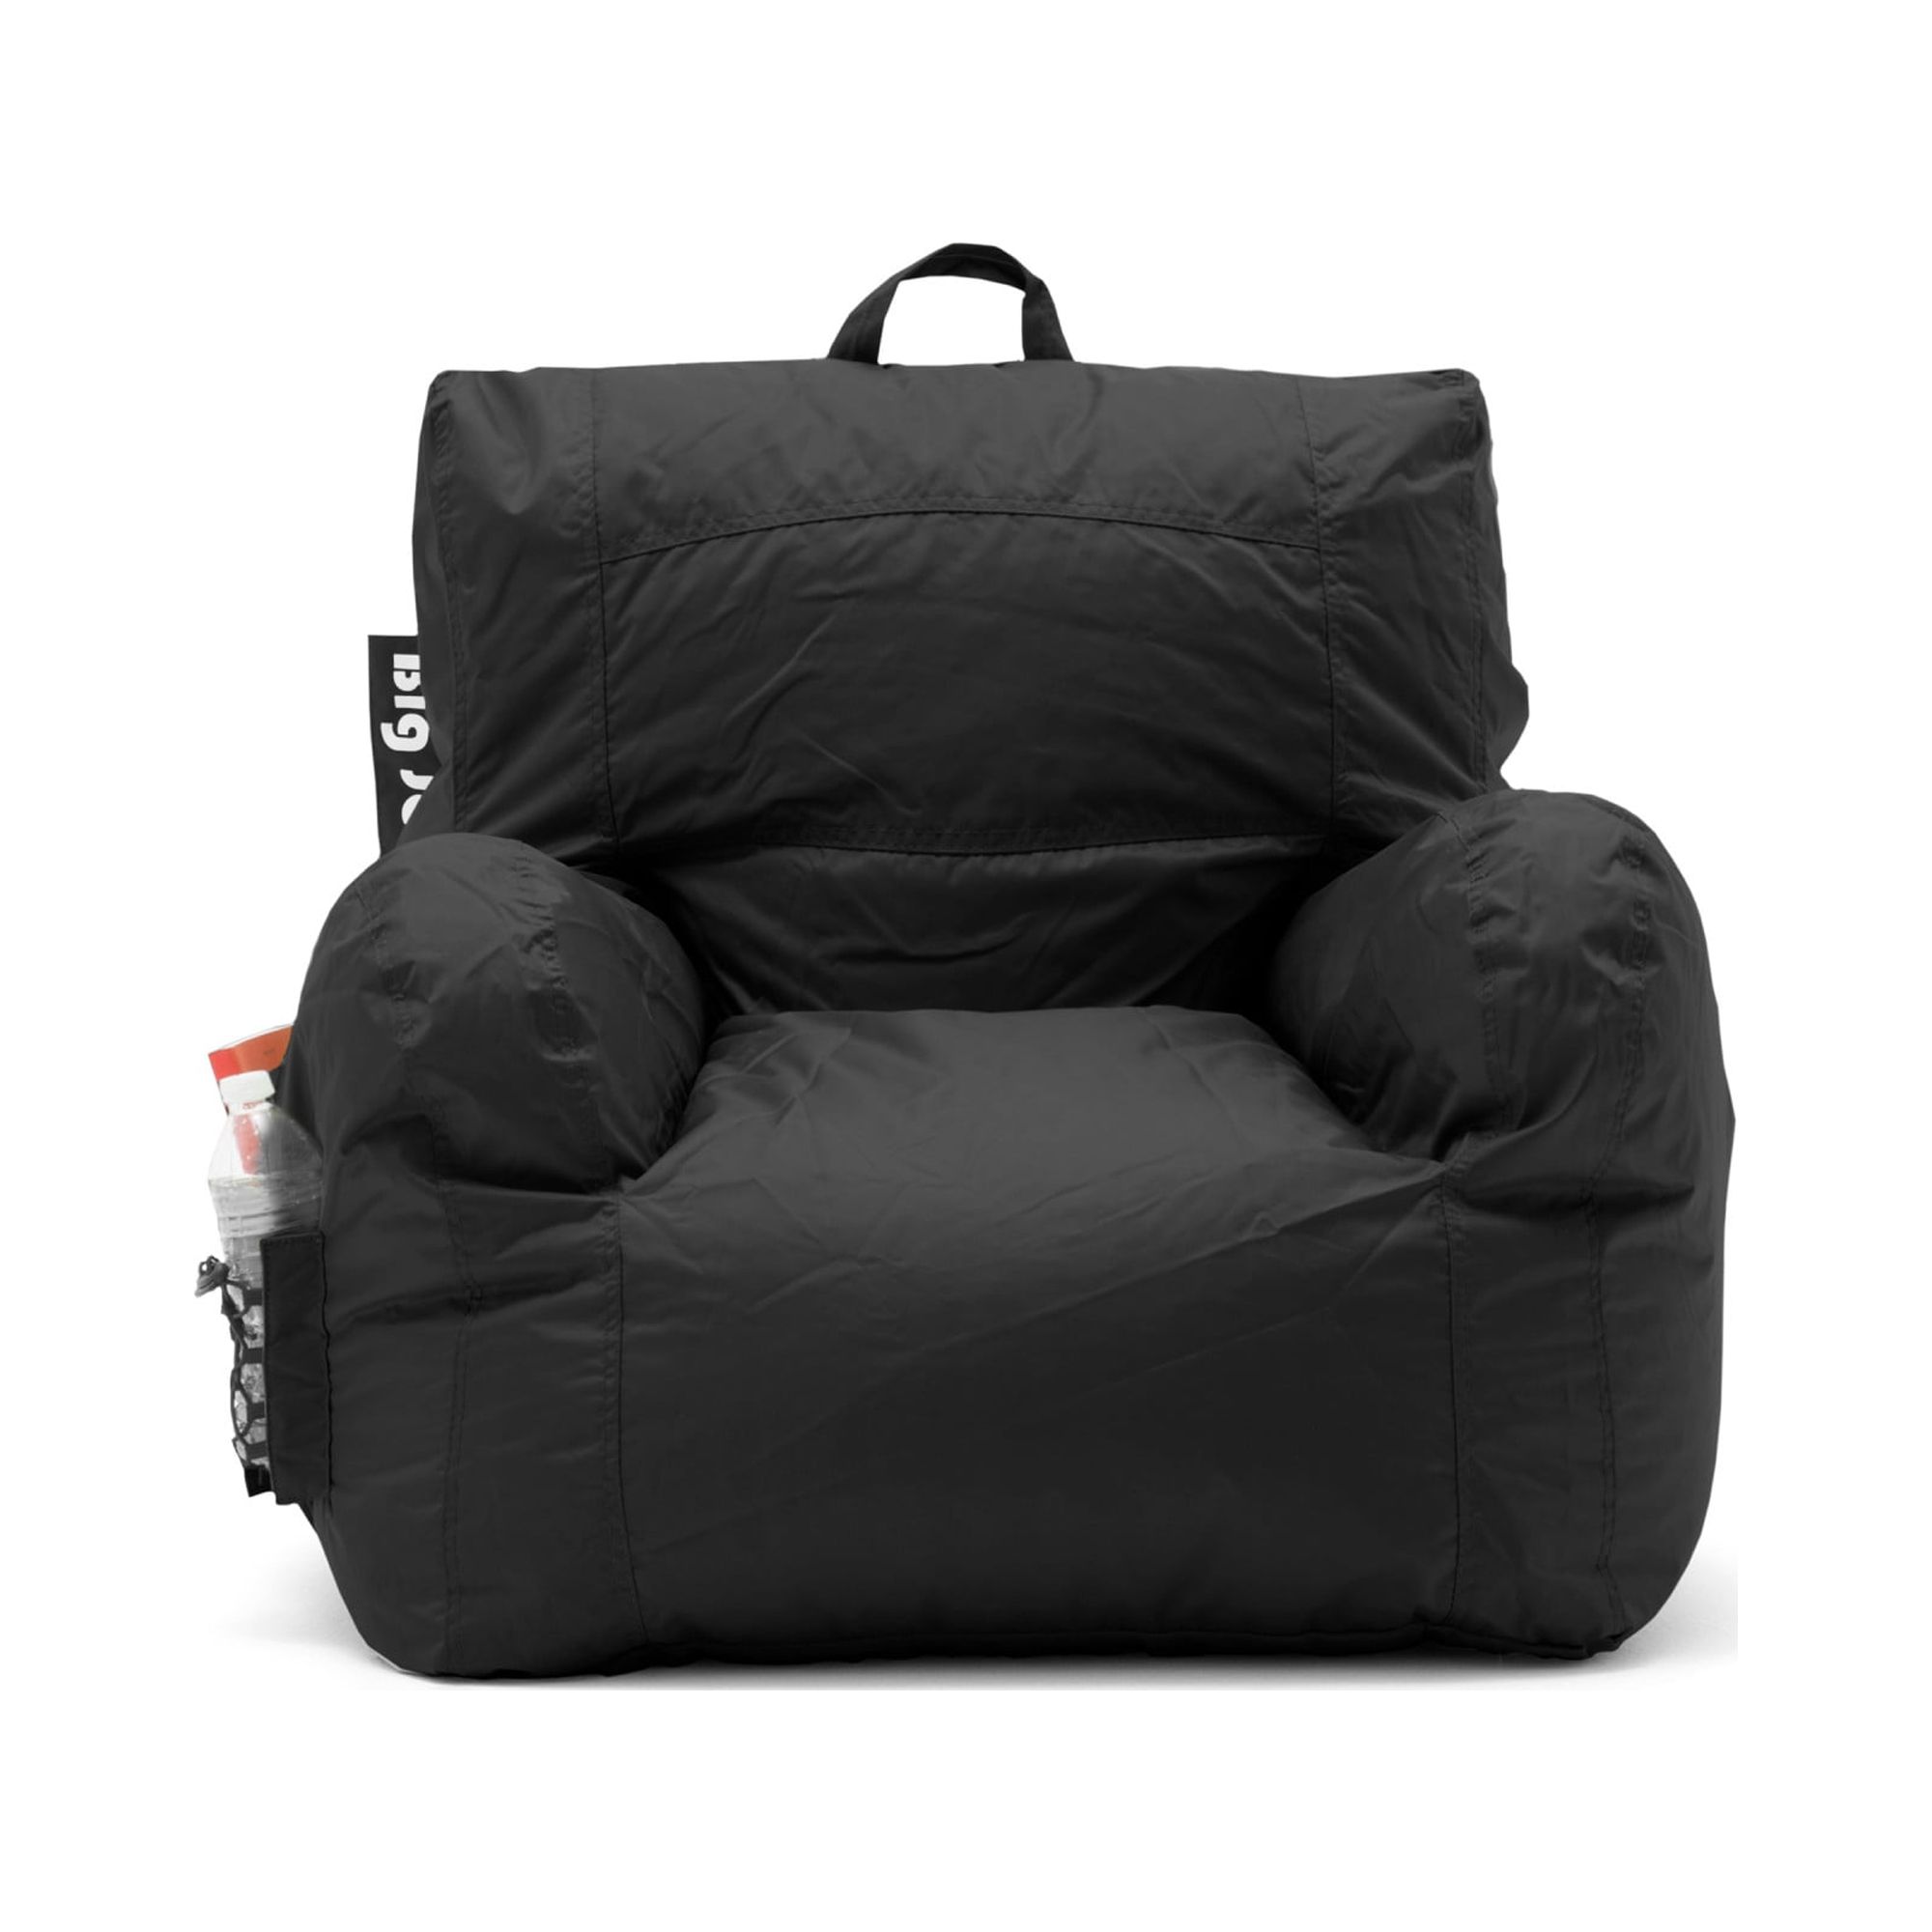 Big Joe Dorm Bean Bag Chair with Drink Holder and Pocket, Black Smartmax, Durable Polyester Nylon Blend, 3 feet - image 1 of 10